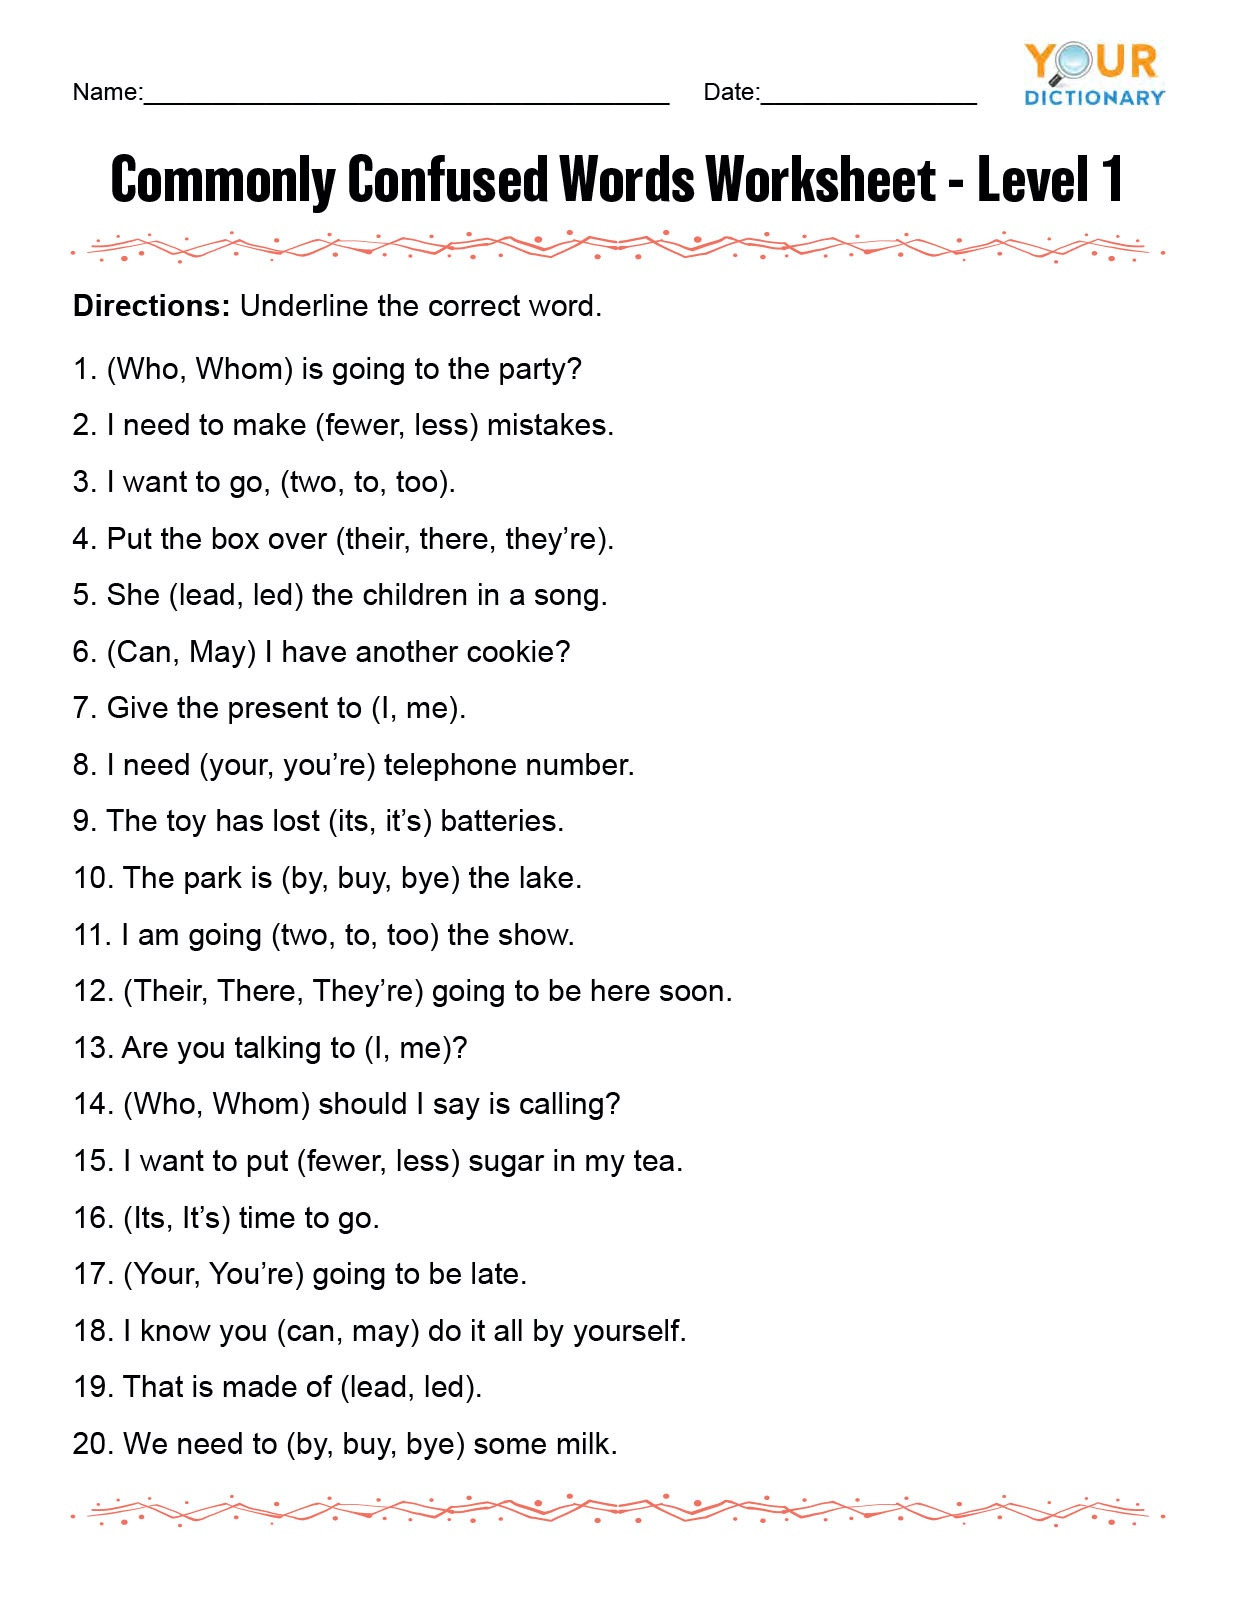 Commonly Misspelled Words Worksheet Monly Confused Words Worksheet